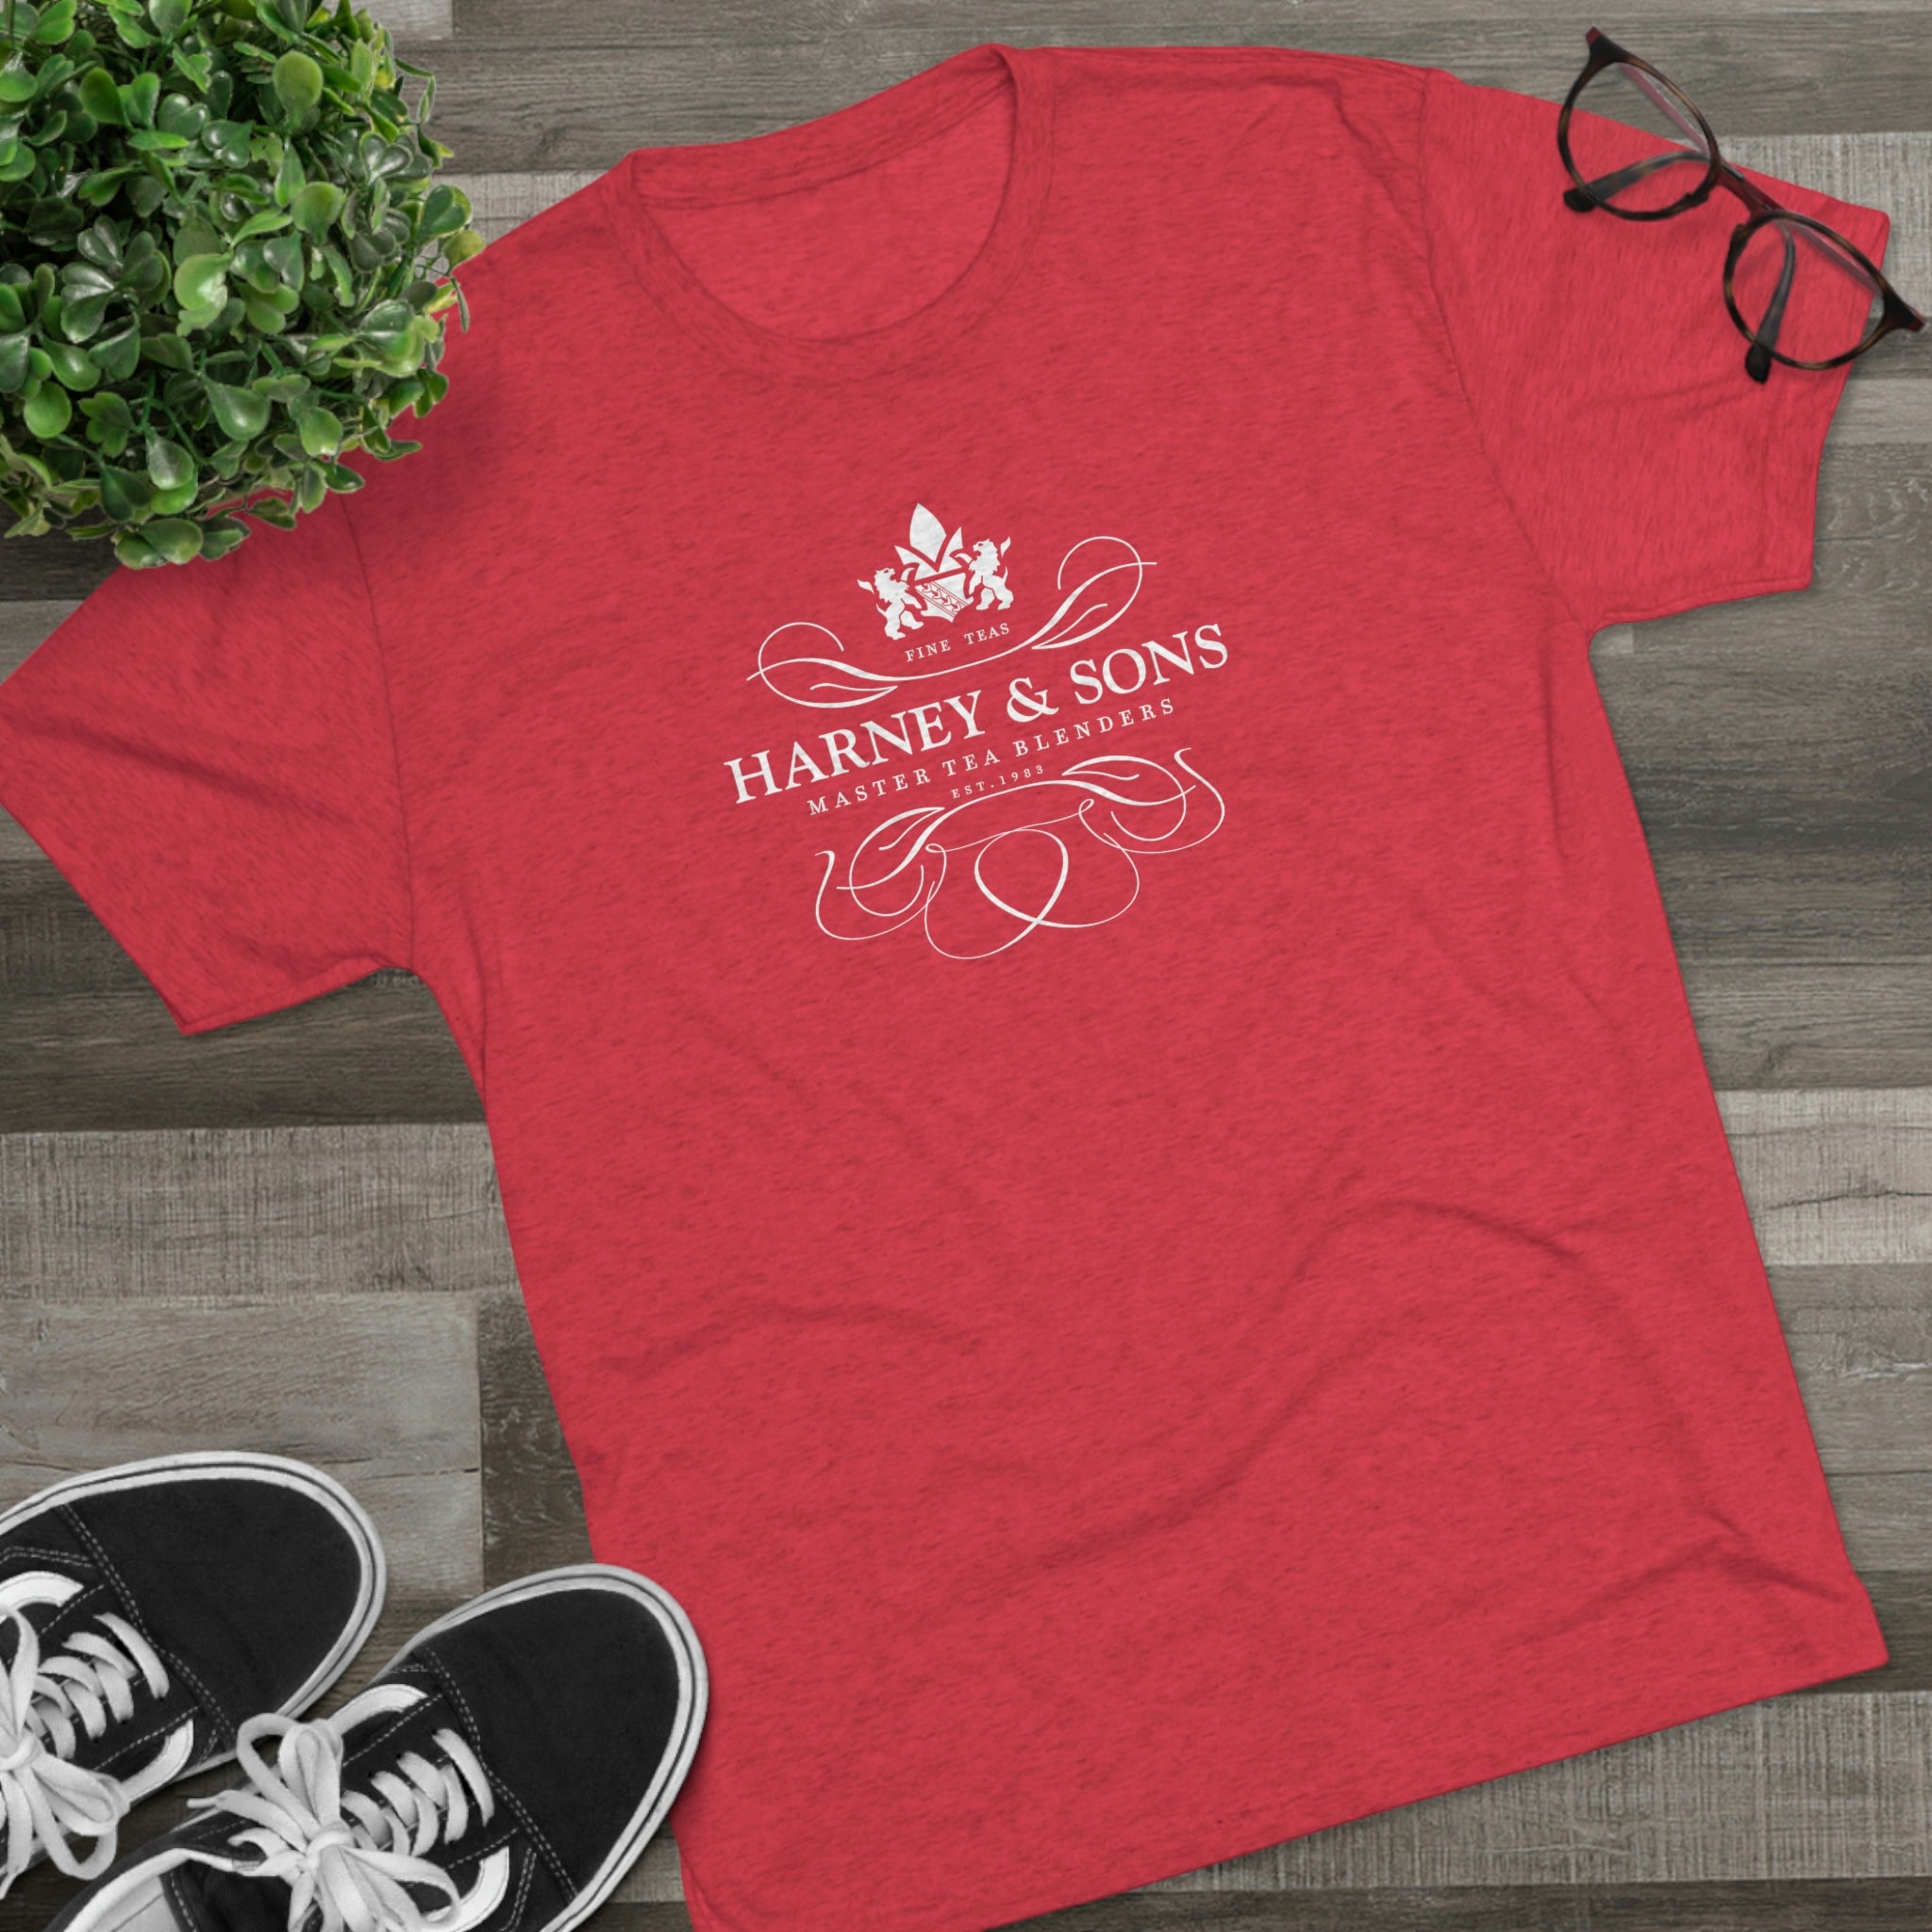 Harney & Sons Logo Graphic Tee -   - Harney & Sons Fine Teas